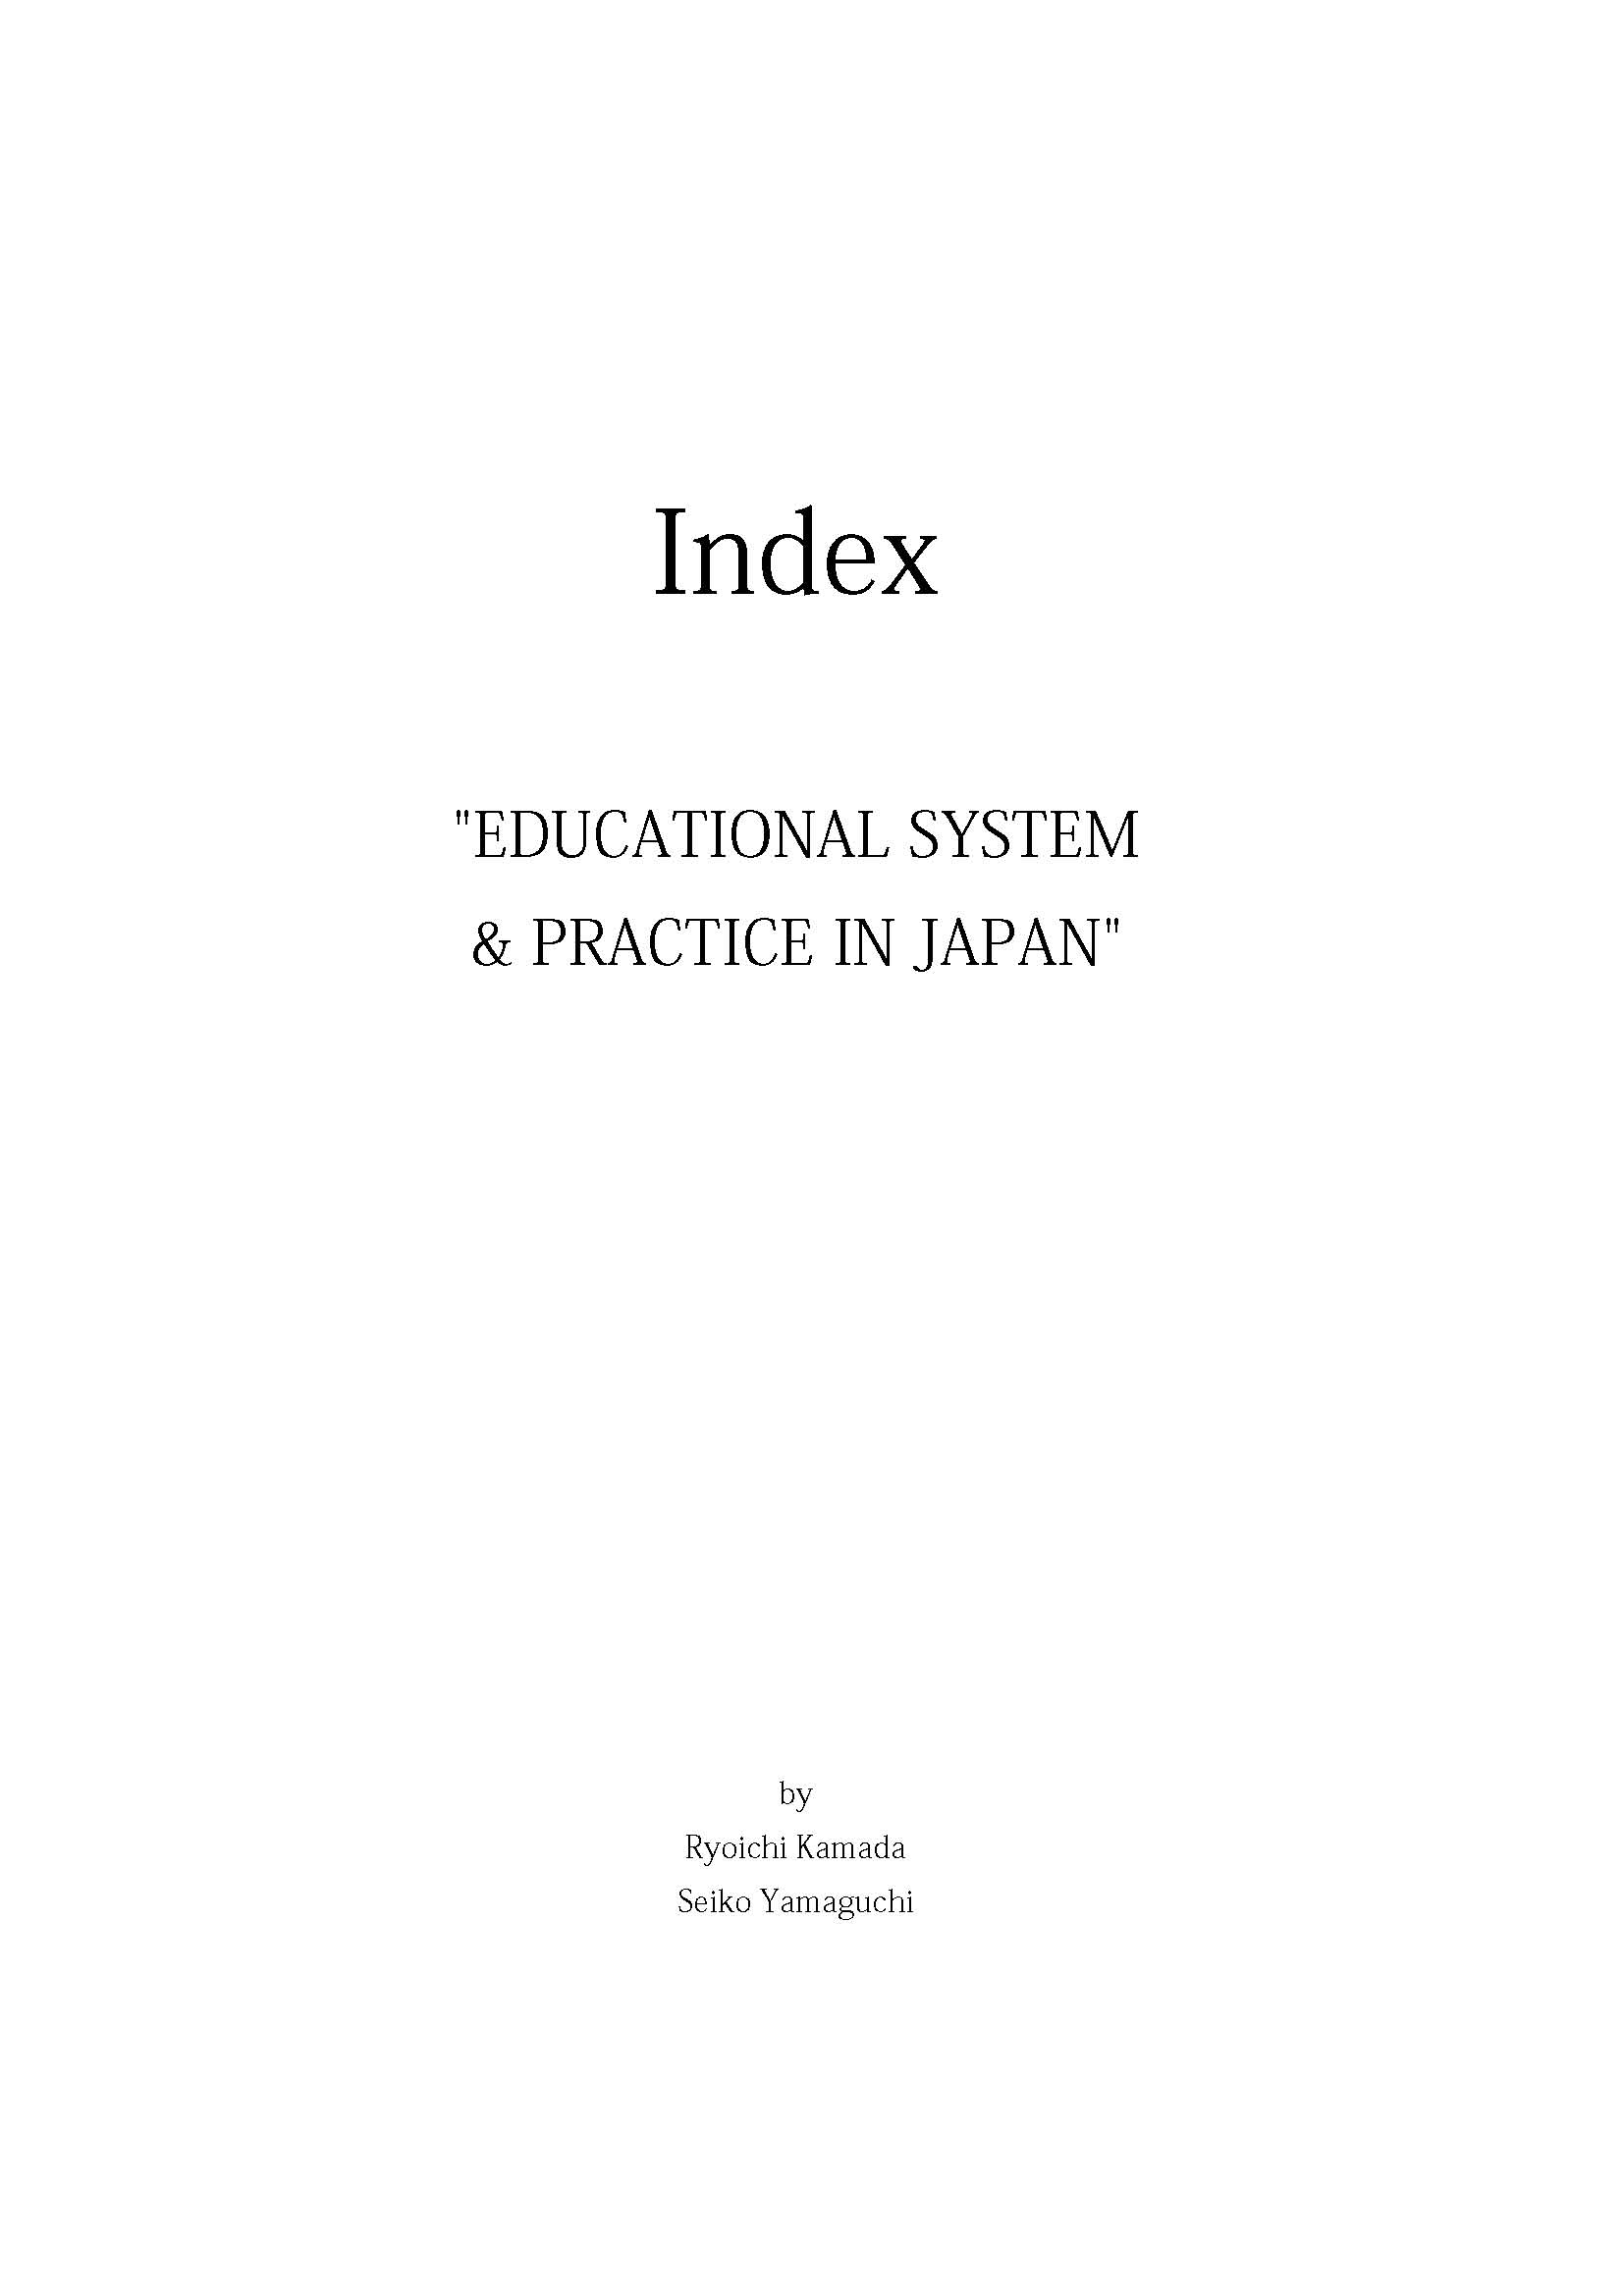 Index/Cover